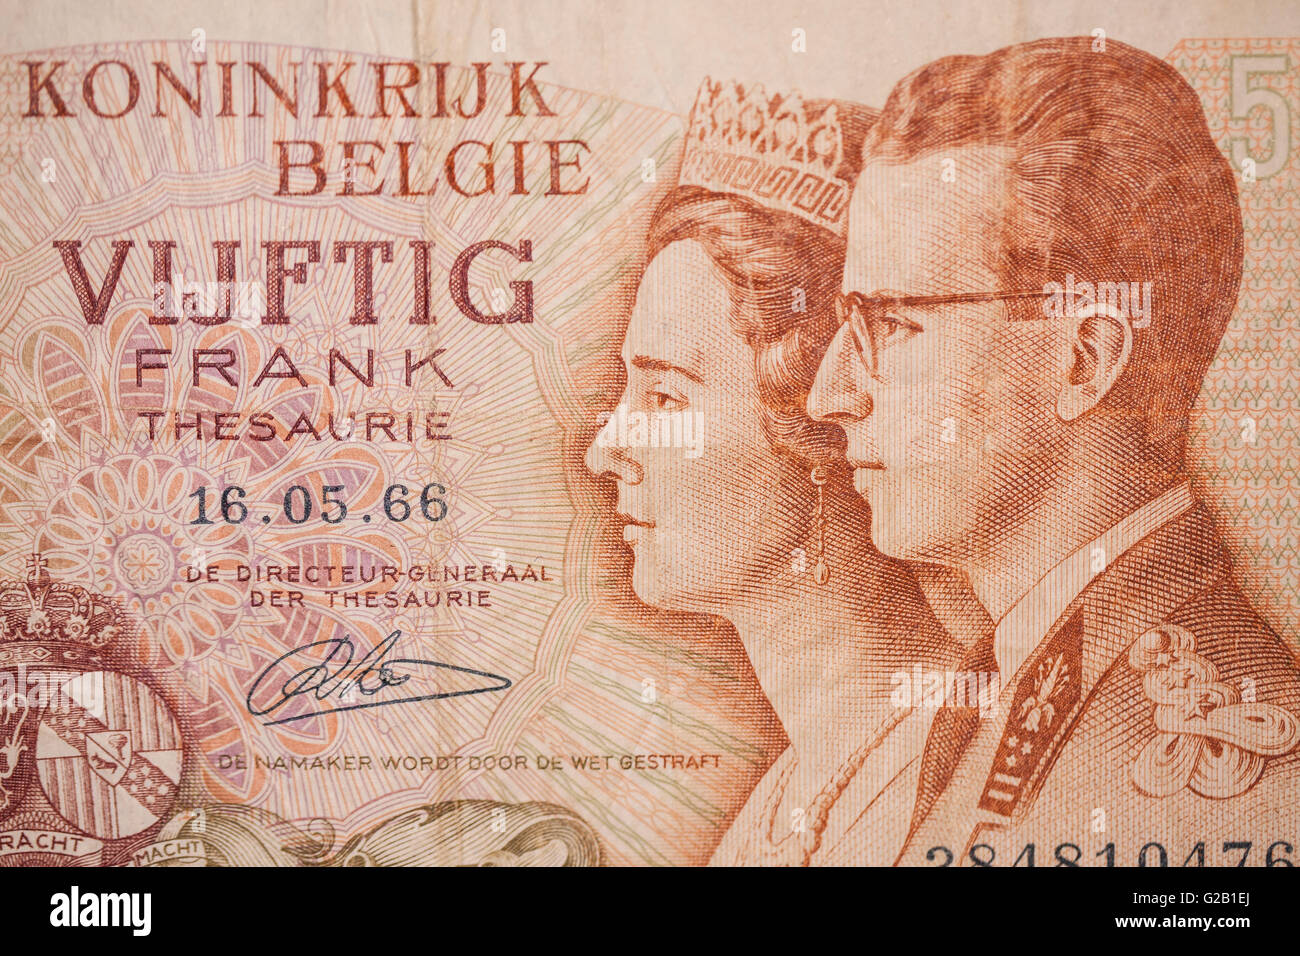 Banknote from Belgium Stock Photo